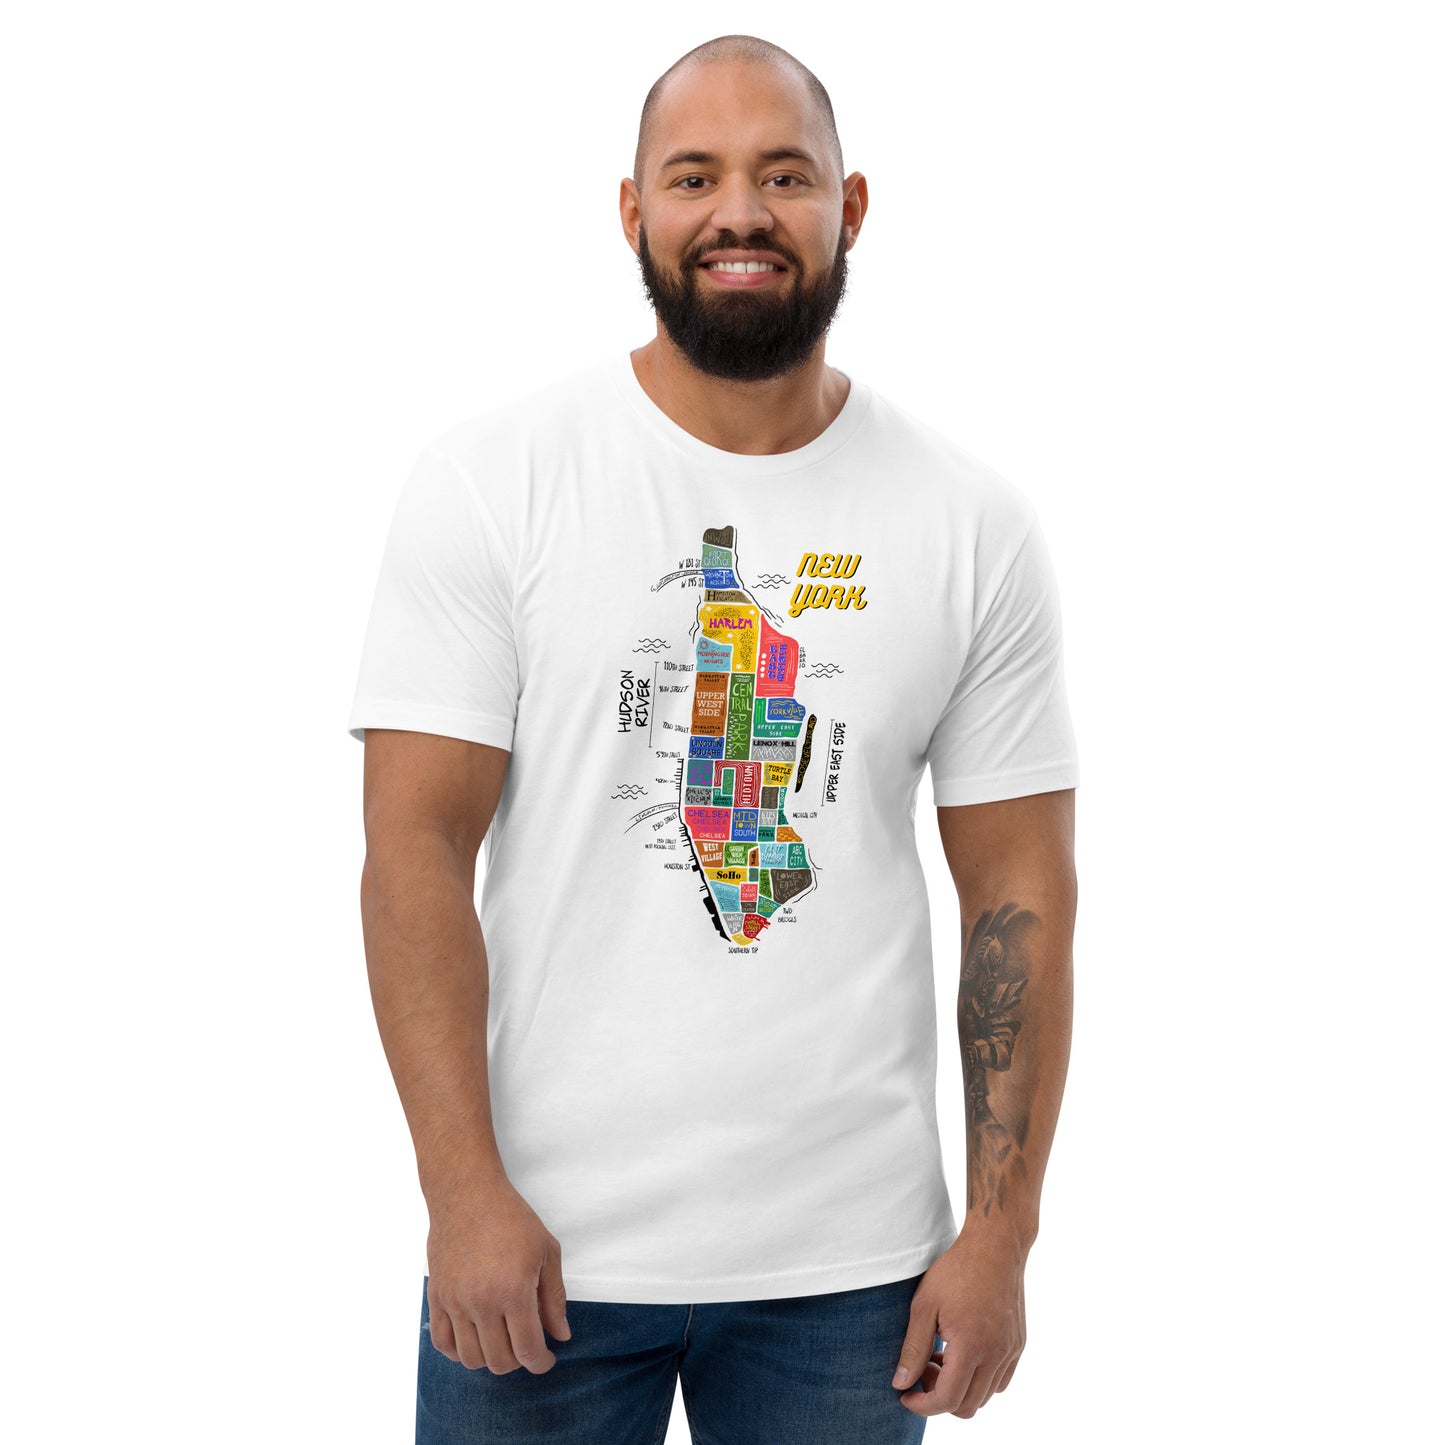 M| NYC map T-shirt